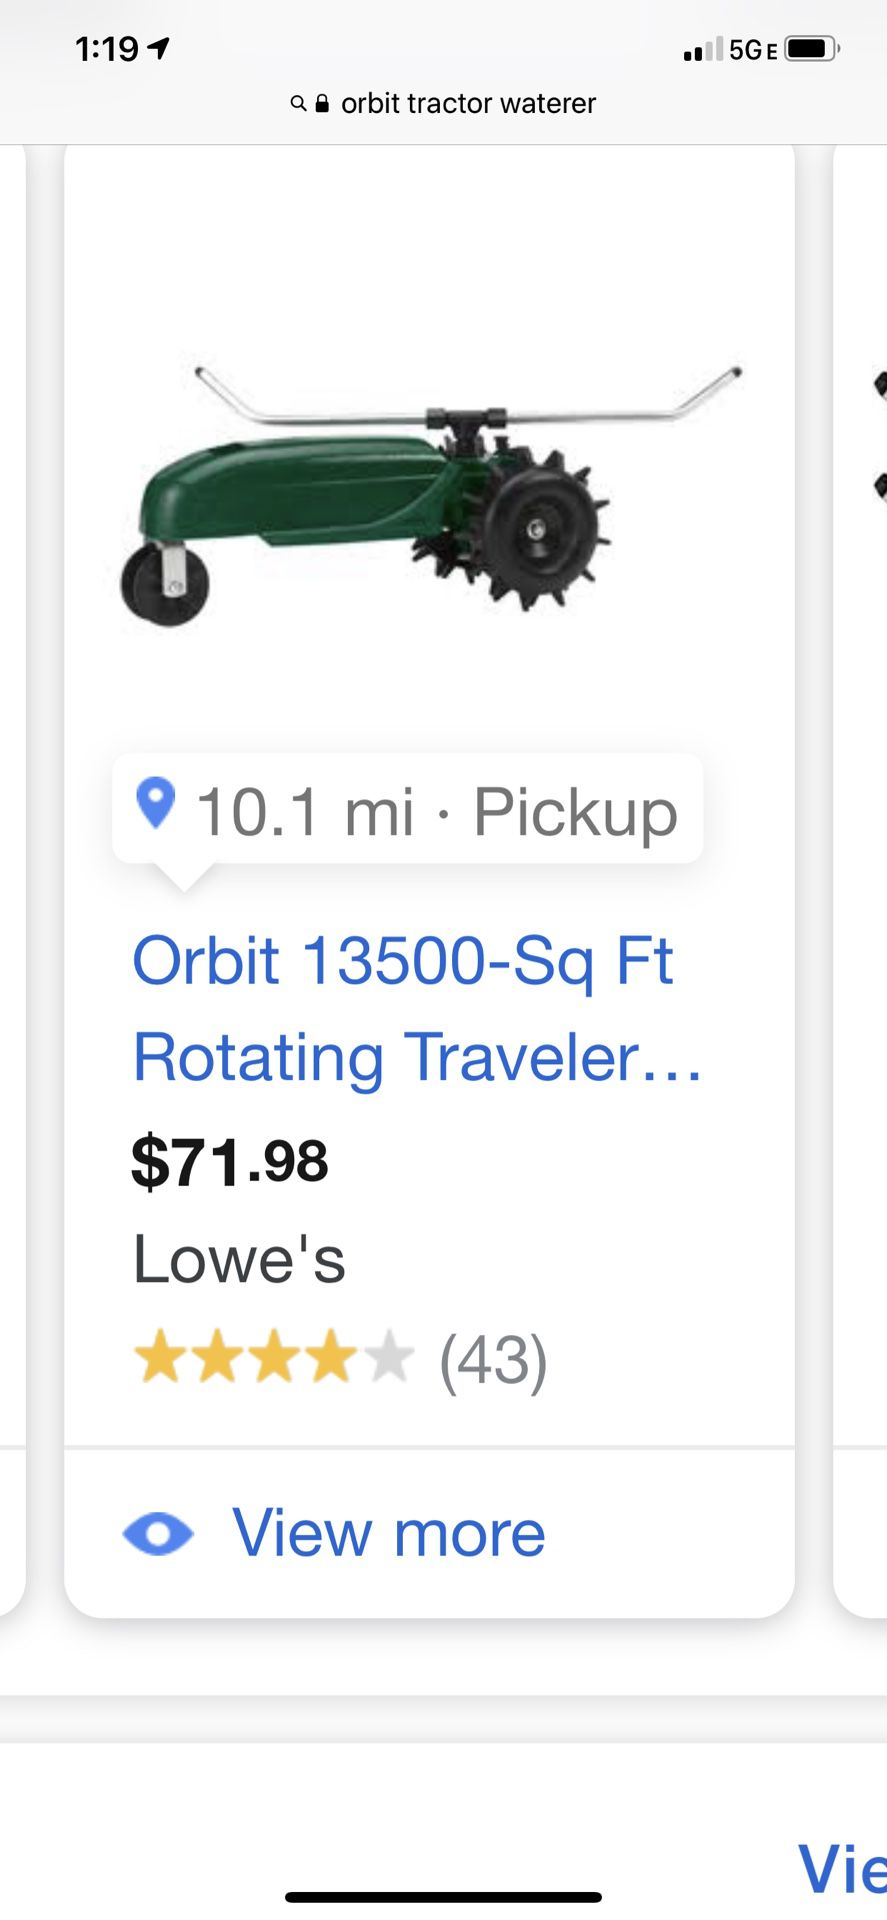 Orbit 13,500’ Tractor Waterer - rotating traveler - water lawns - sprinkler